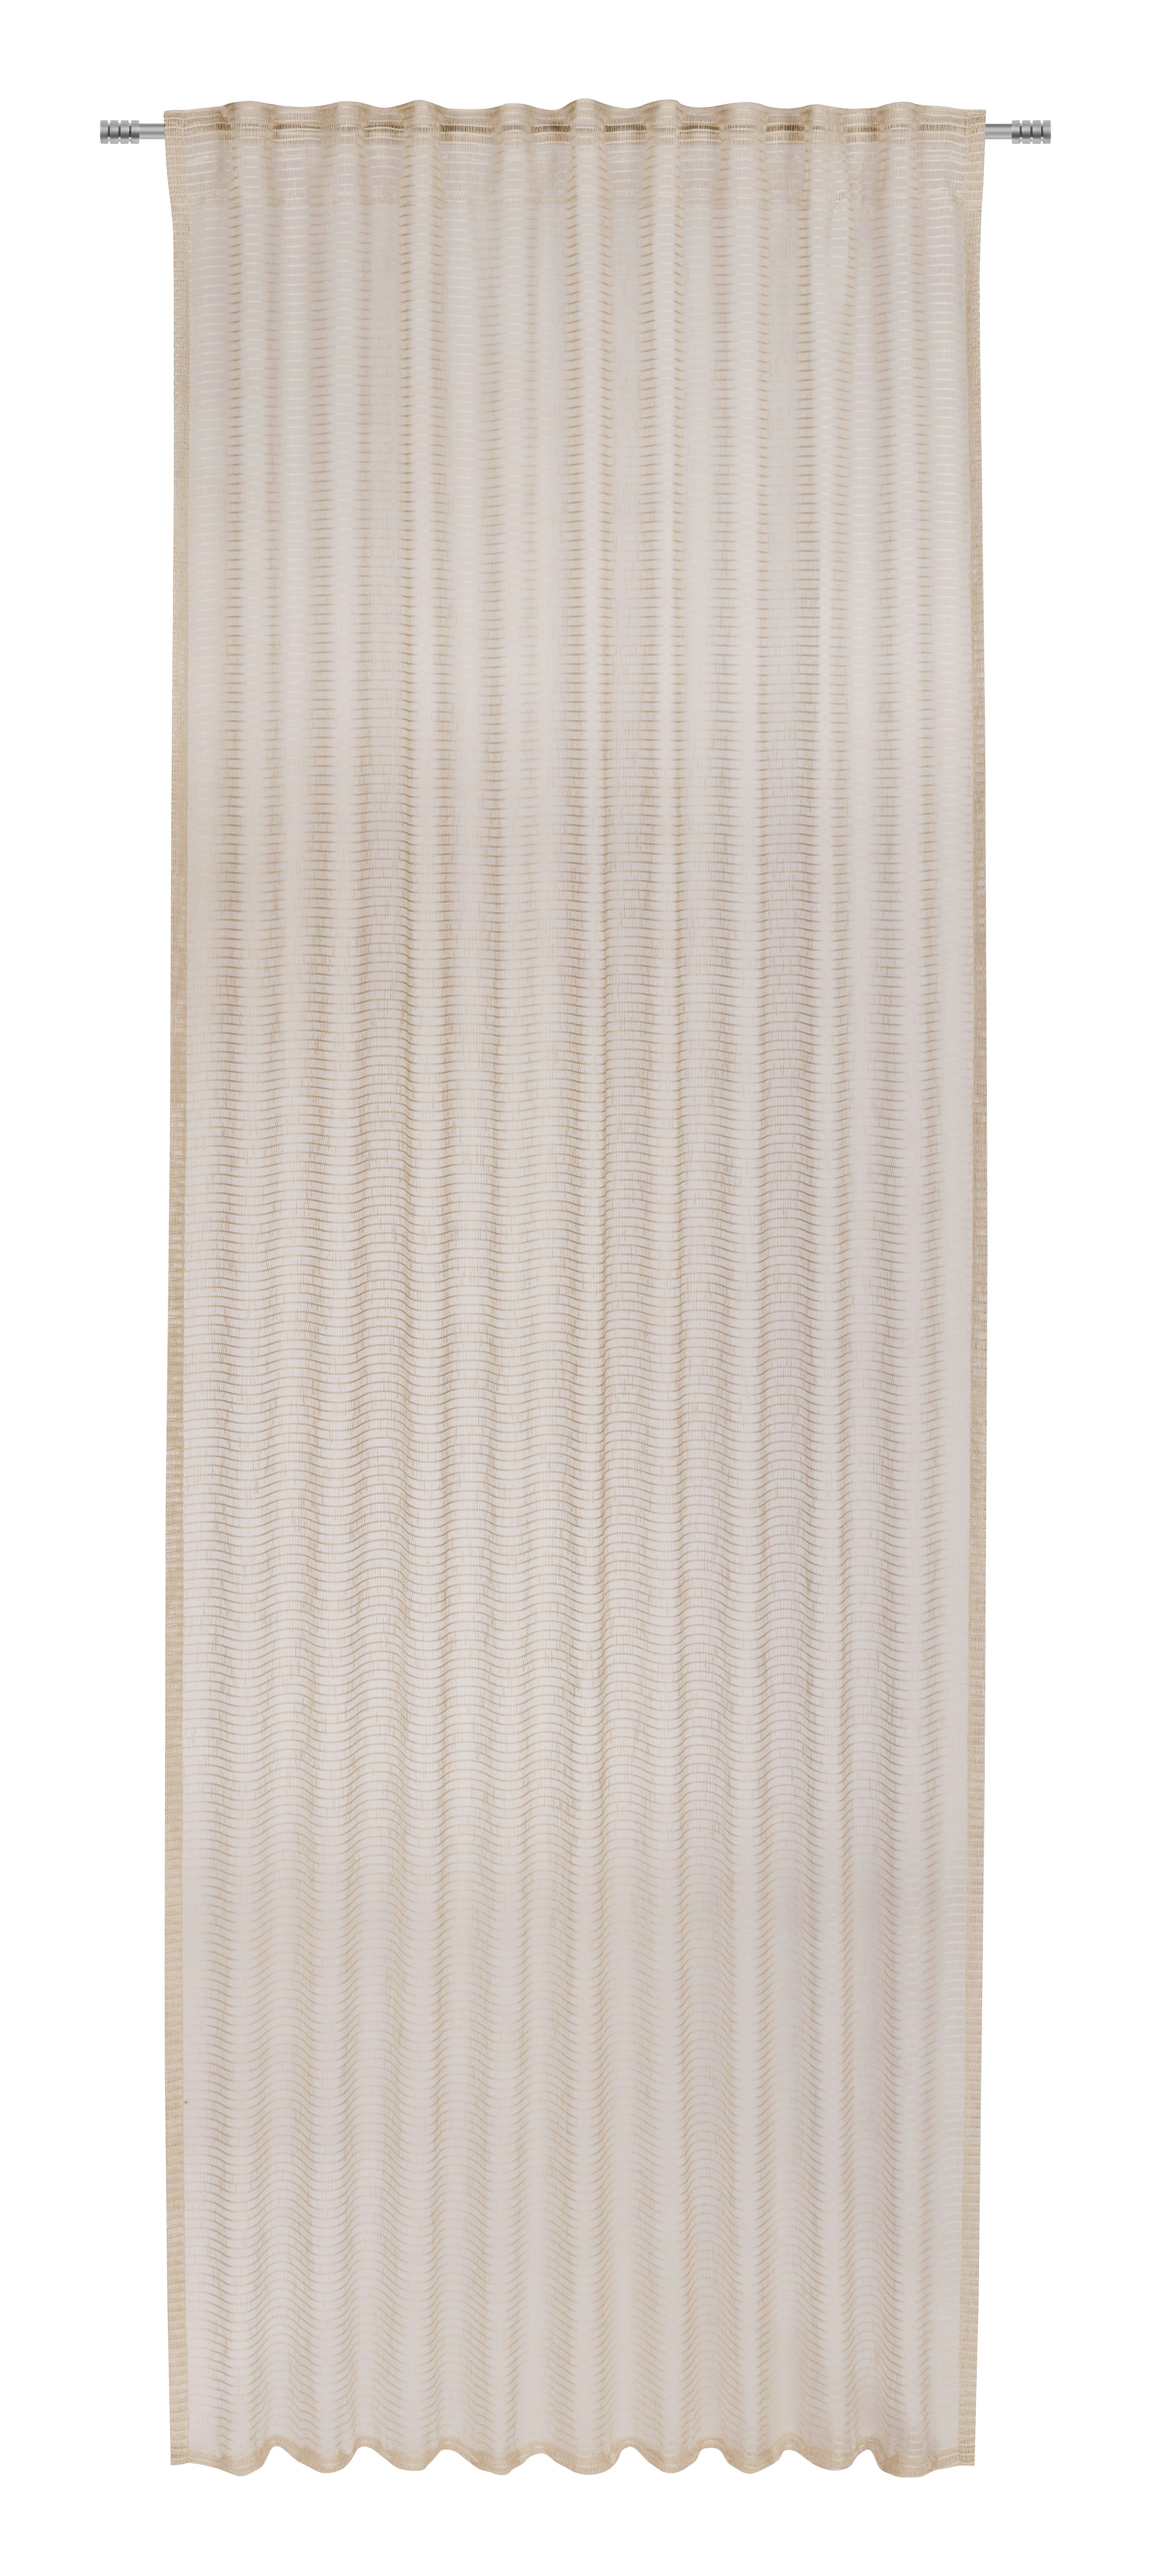 Gotova Zavjesa Luka - prirodne boje, Konventionell, tekstil (135/245cm) - Premium Living